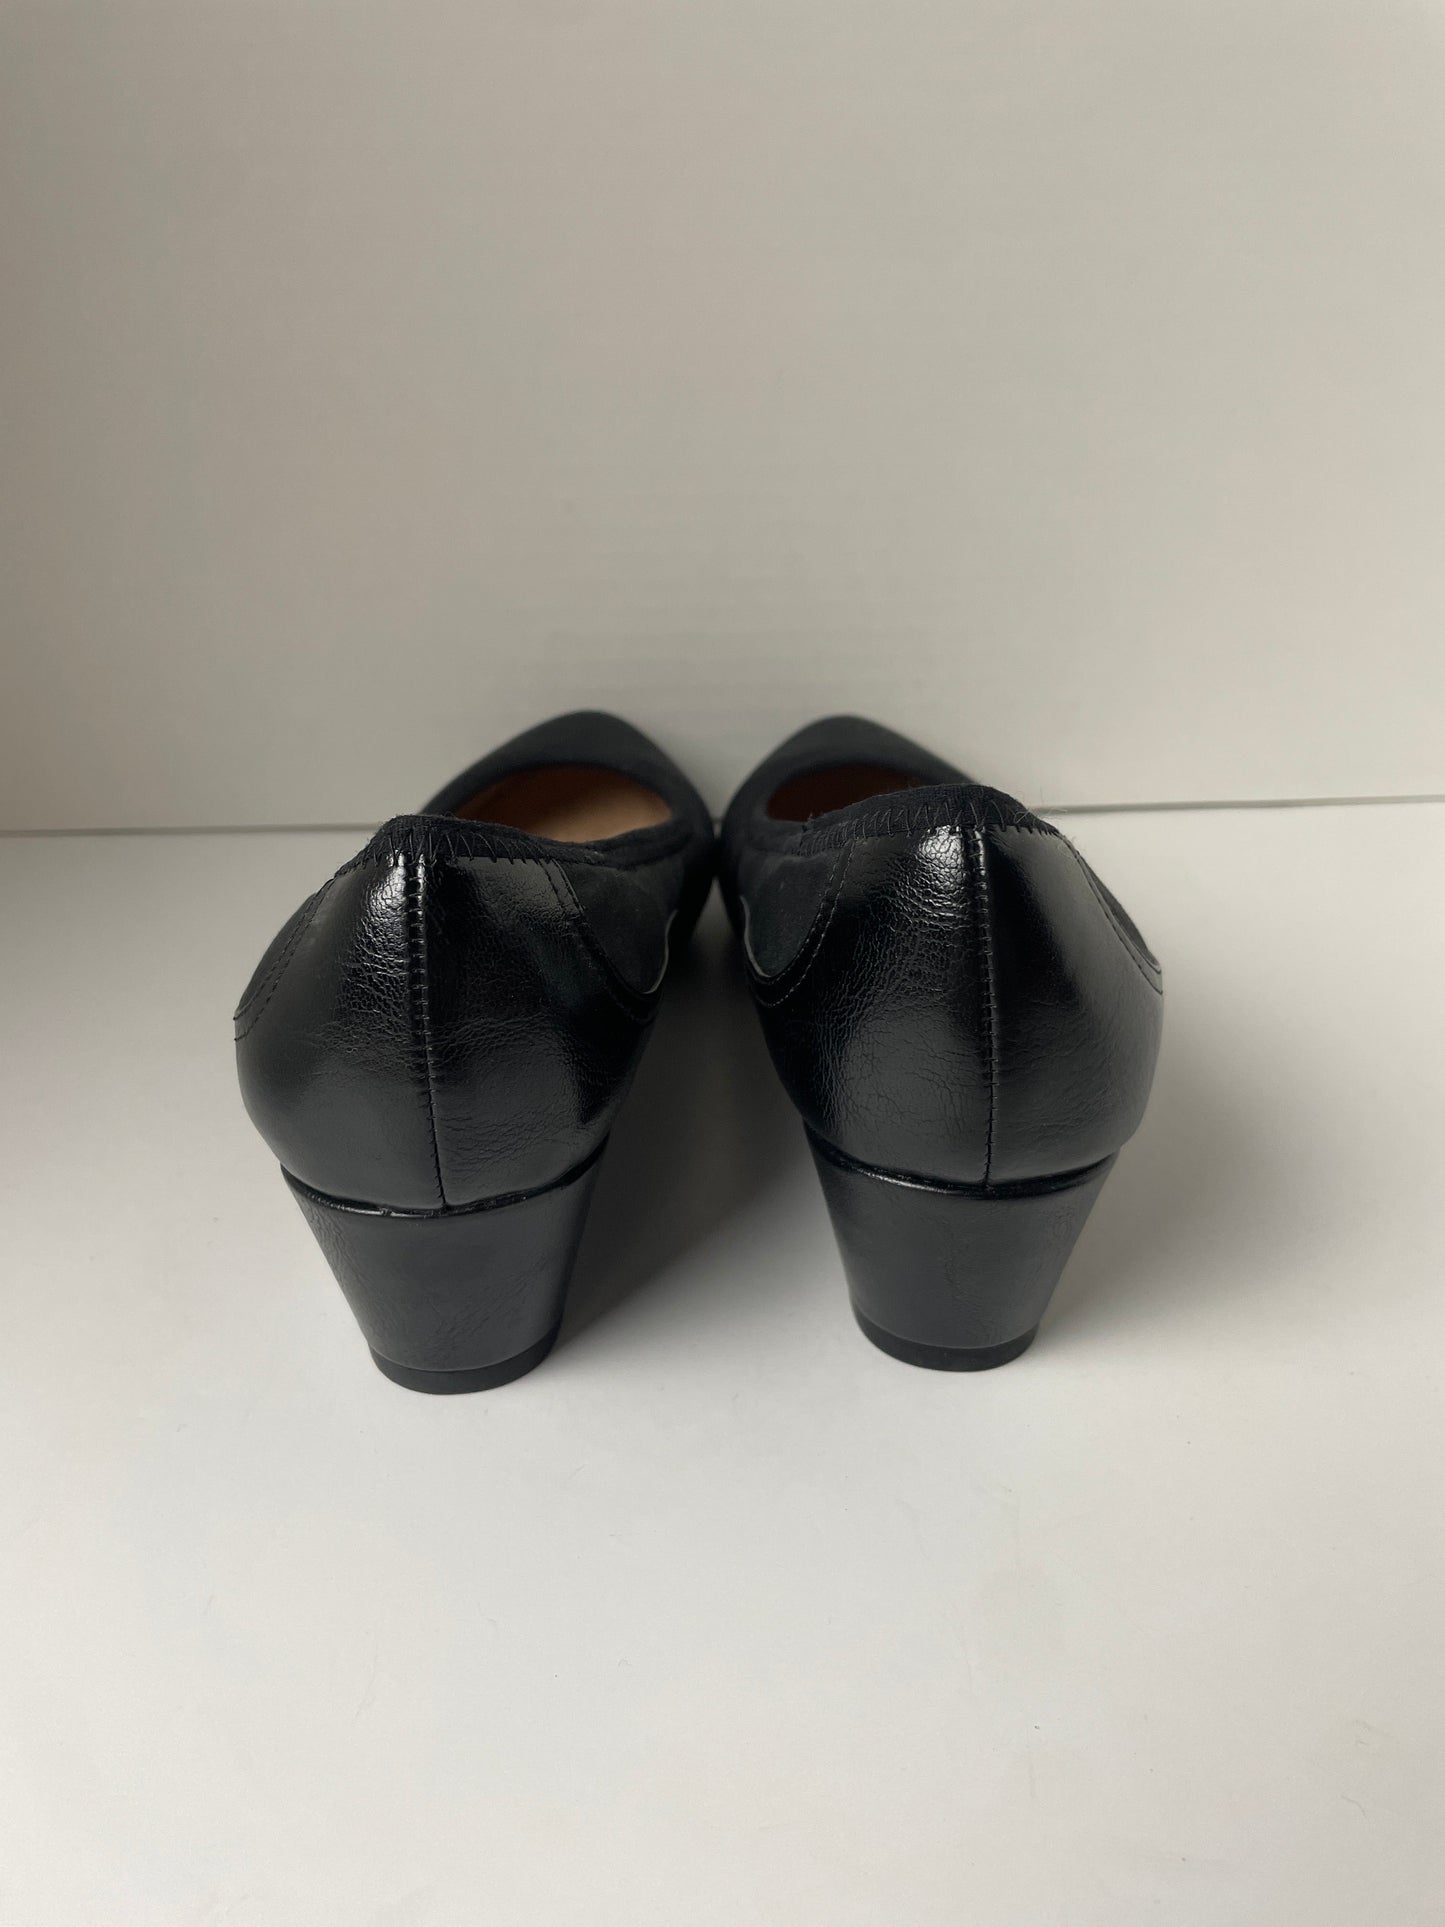 Black Shoes Flats Velocity, Size 11